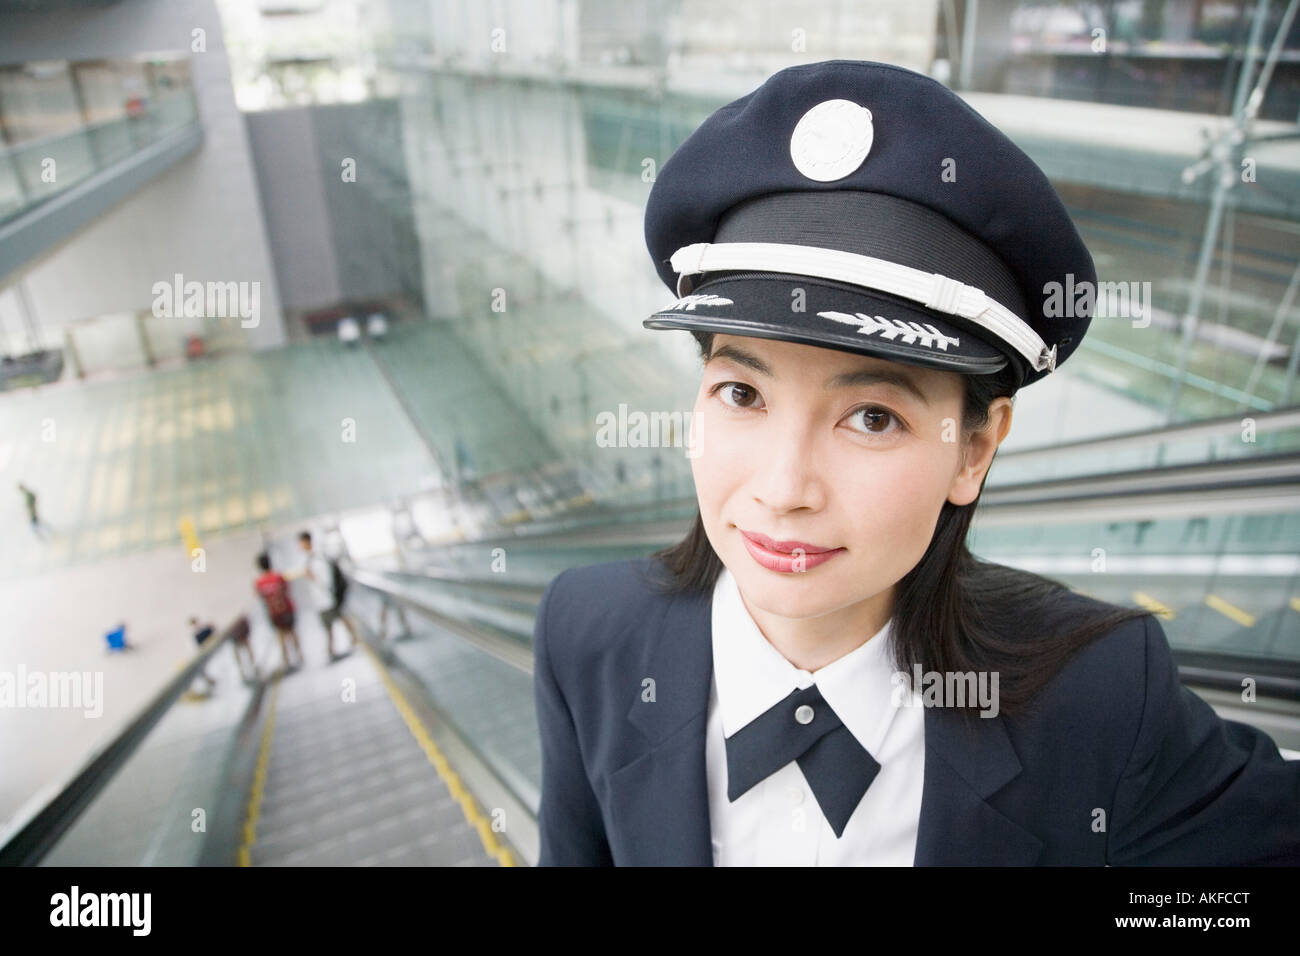 Portrait of a female pilot standing on an escalator Stock Photo